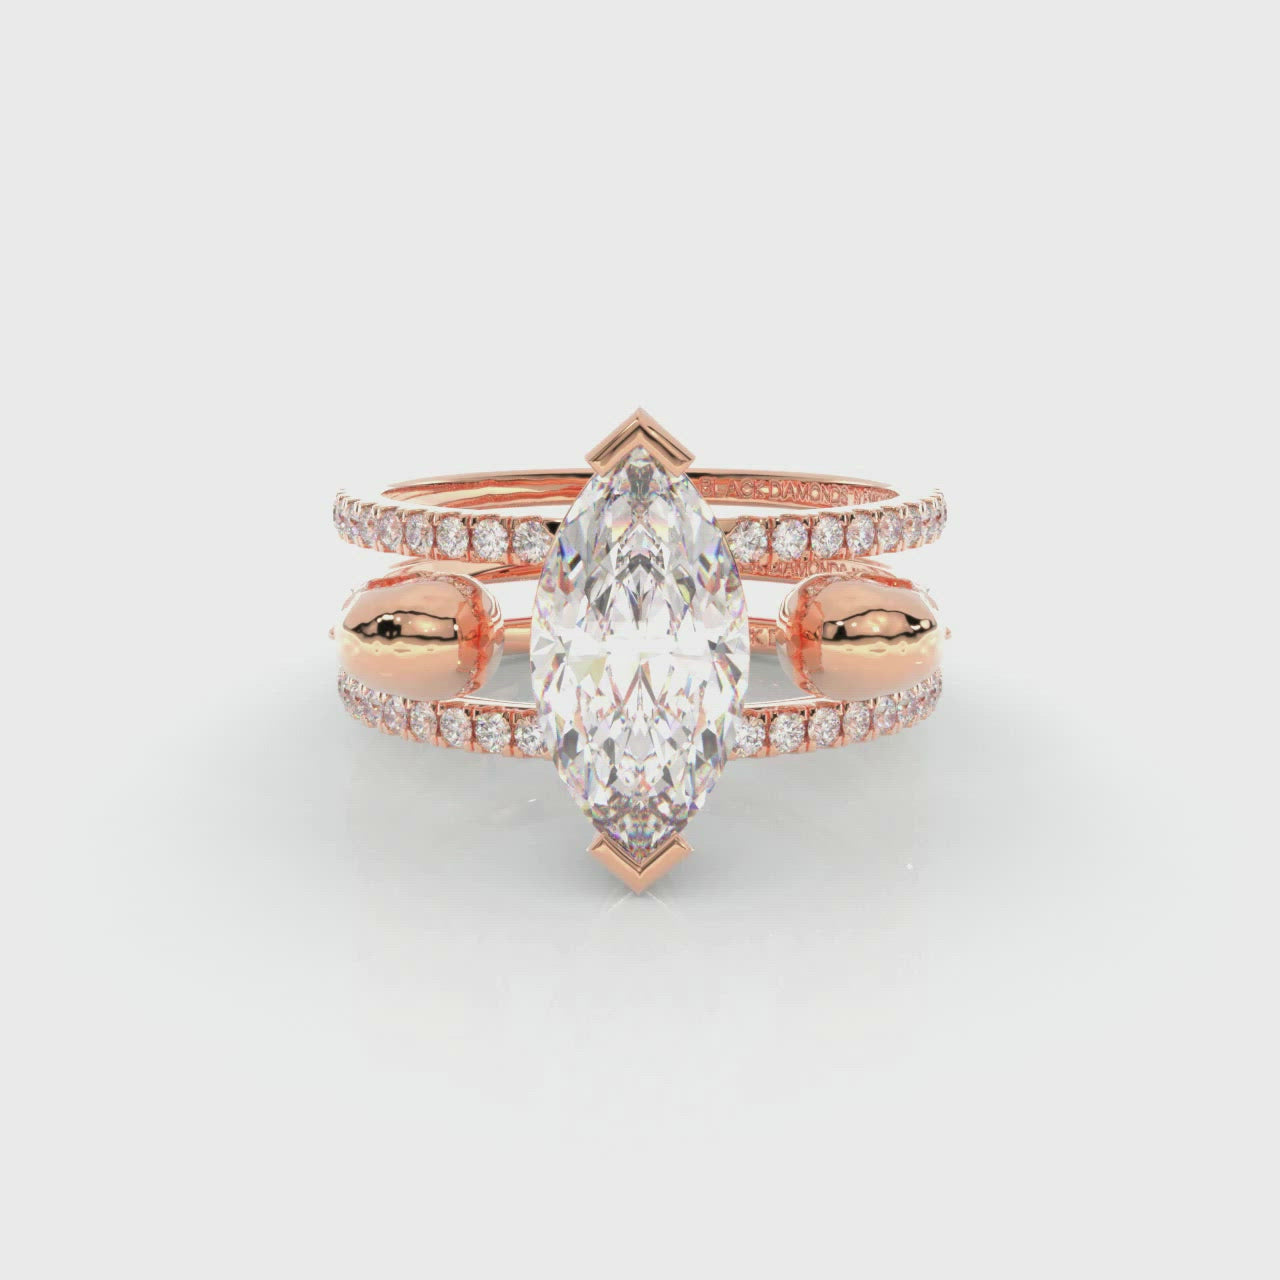 You & Me Rings- 14k Rose Gold Gothic Wedding Rings